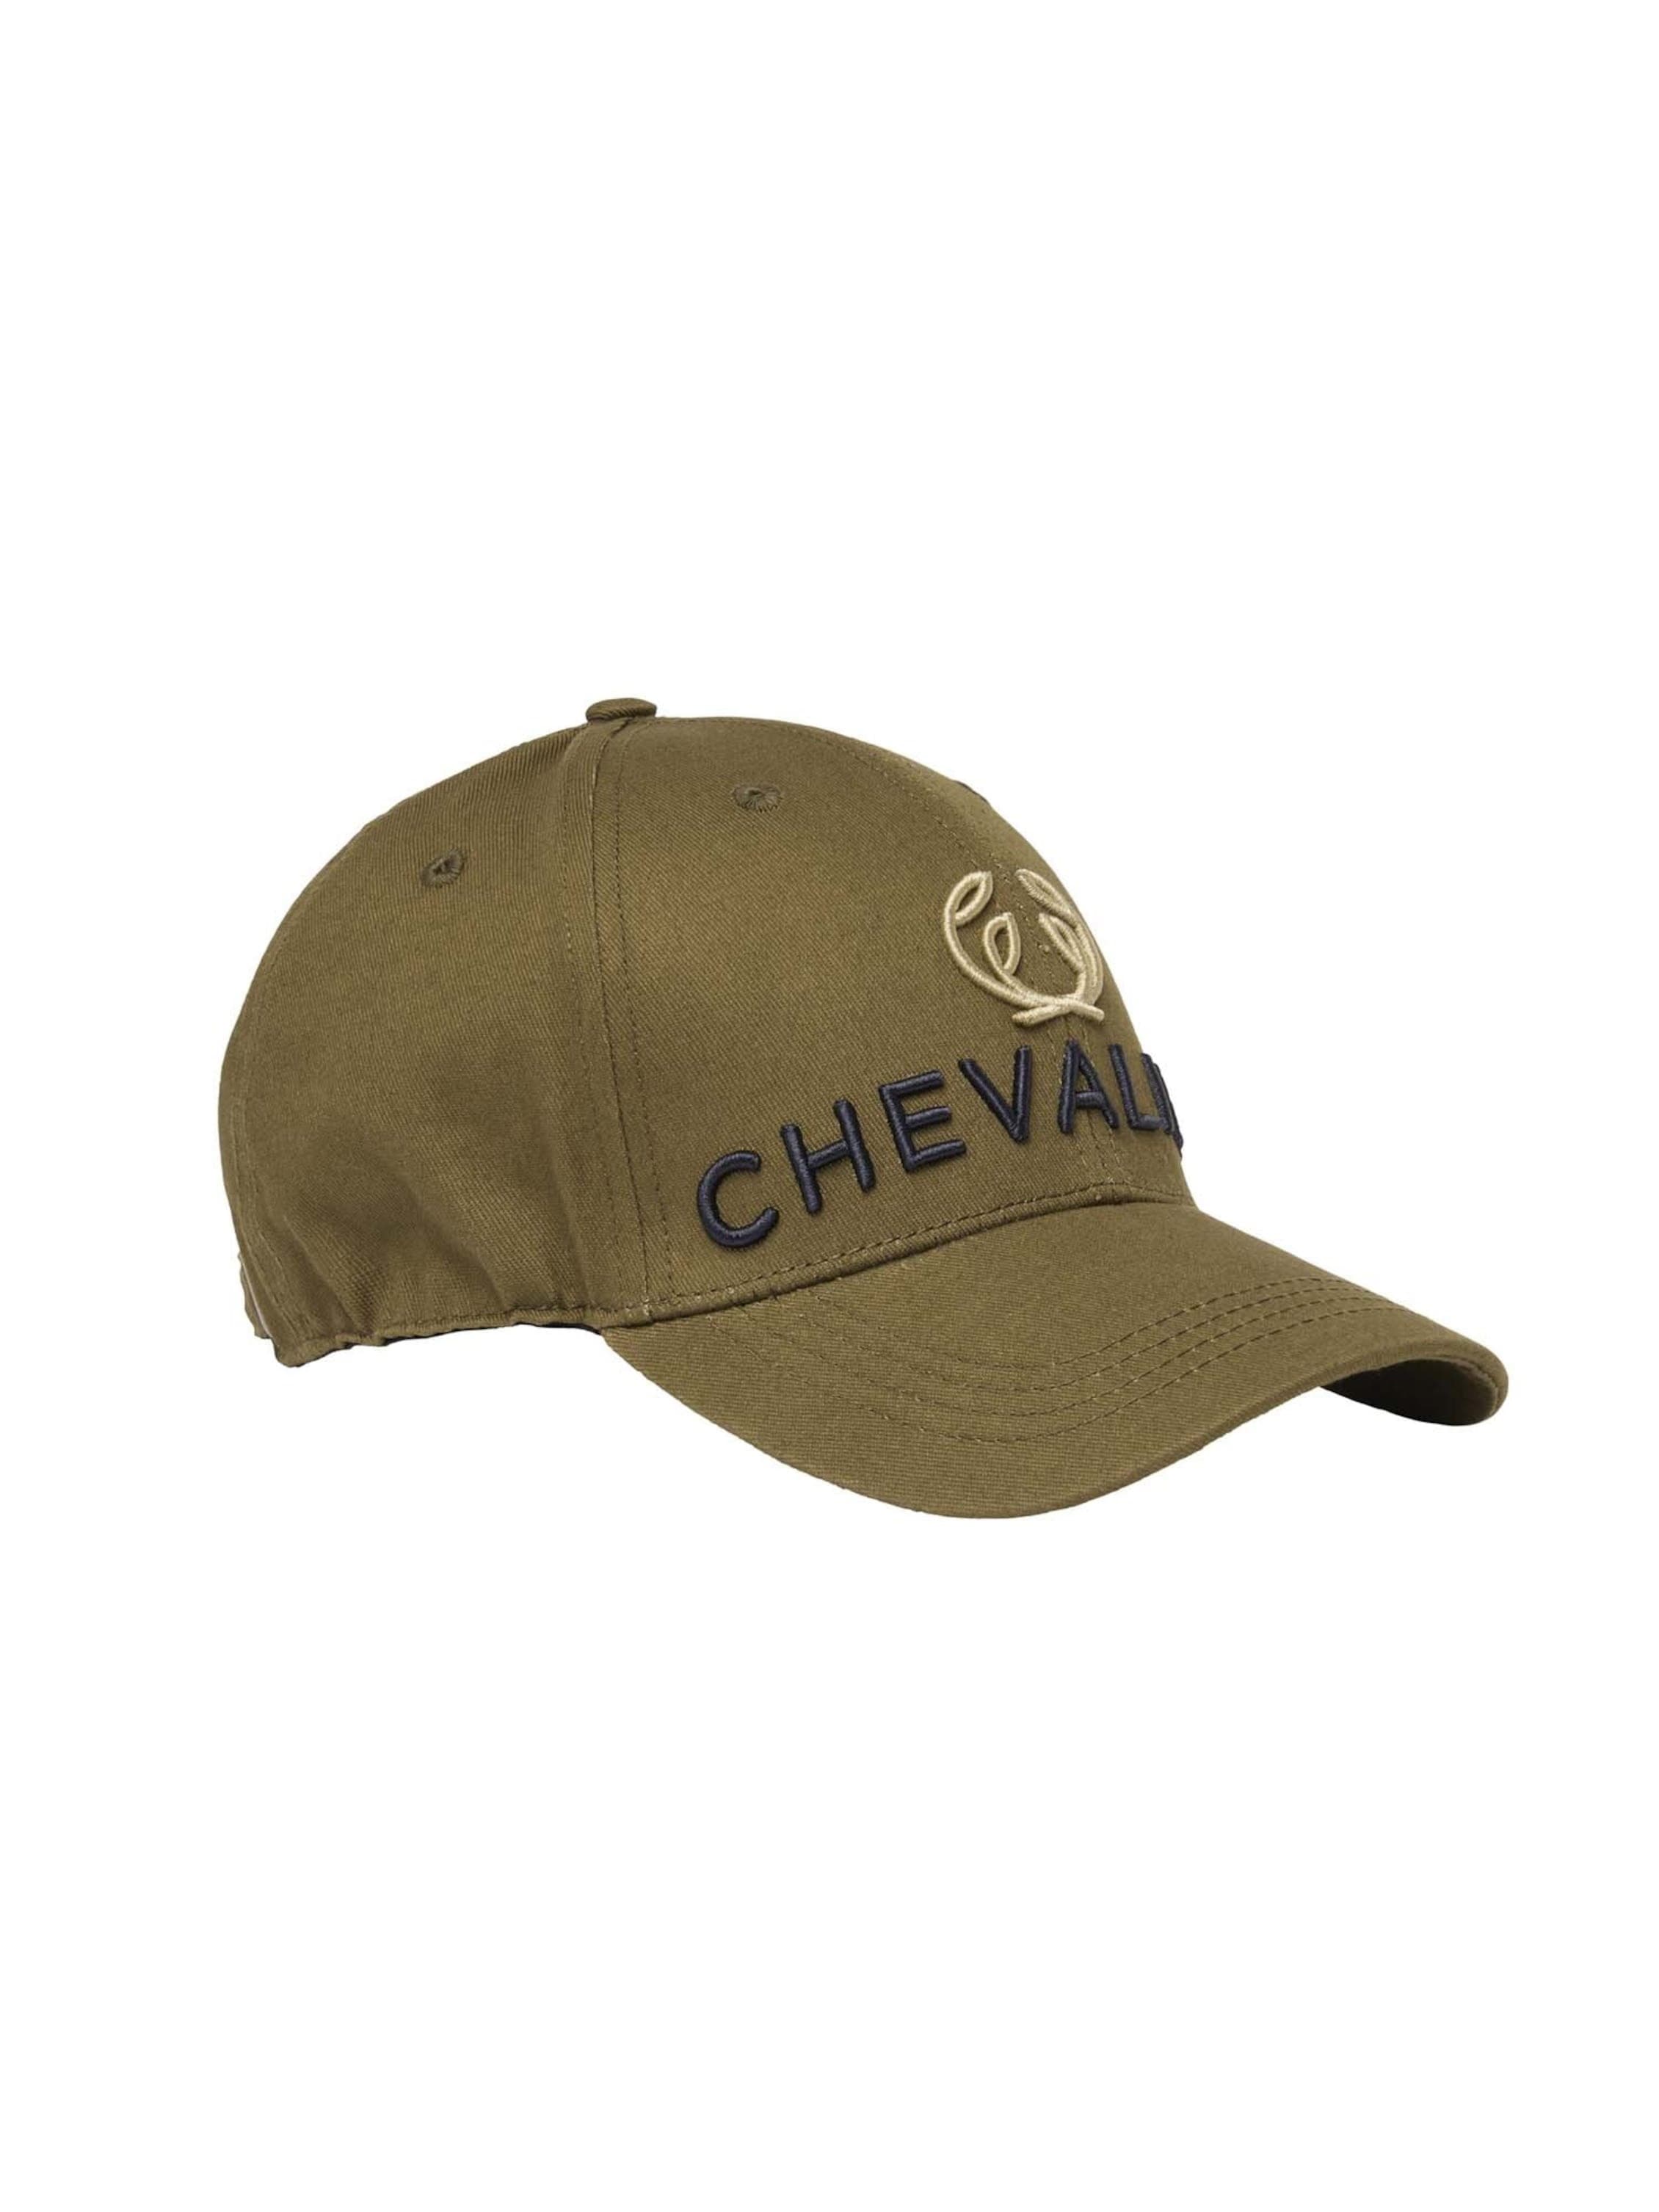 Chevalier Elm Logo Caps